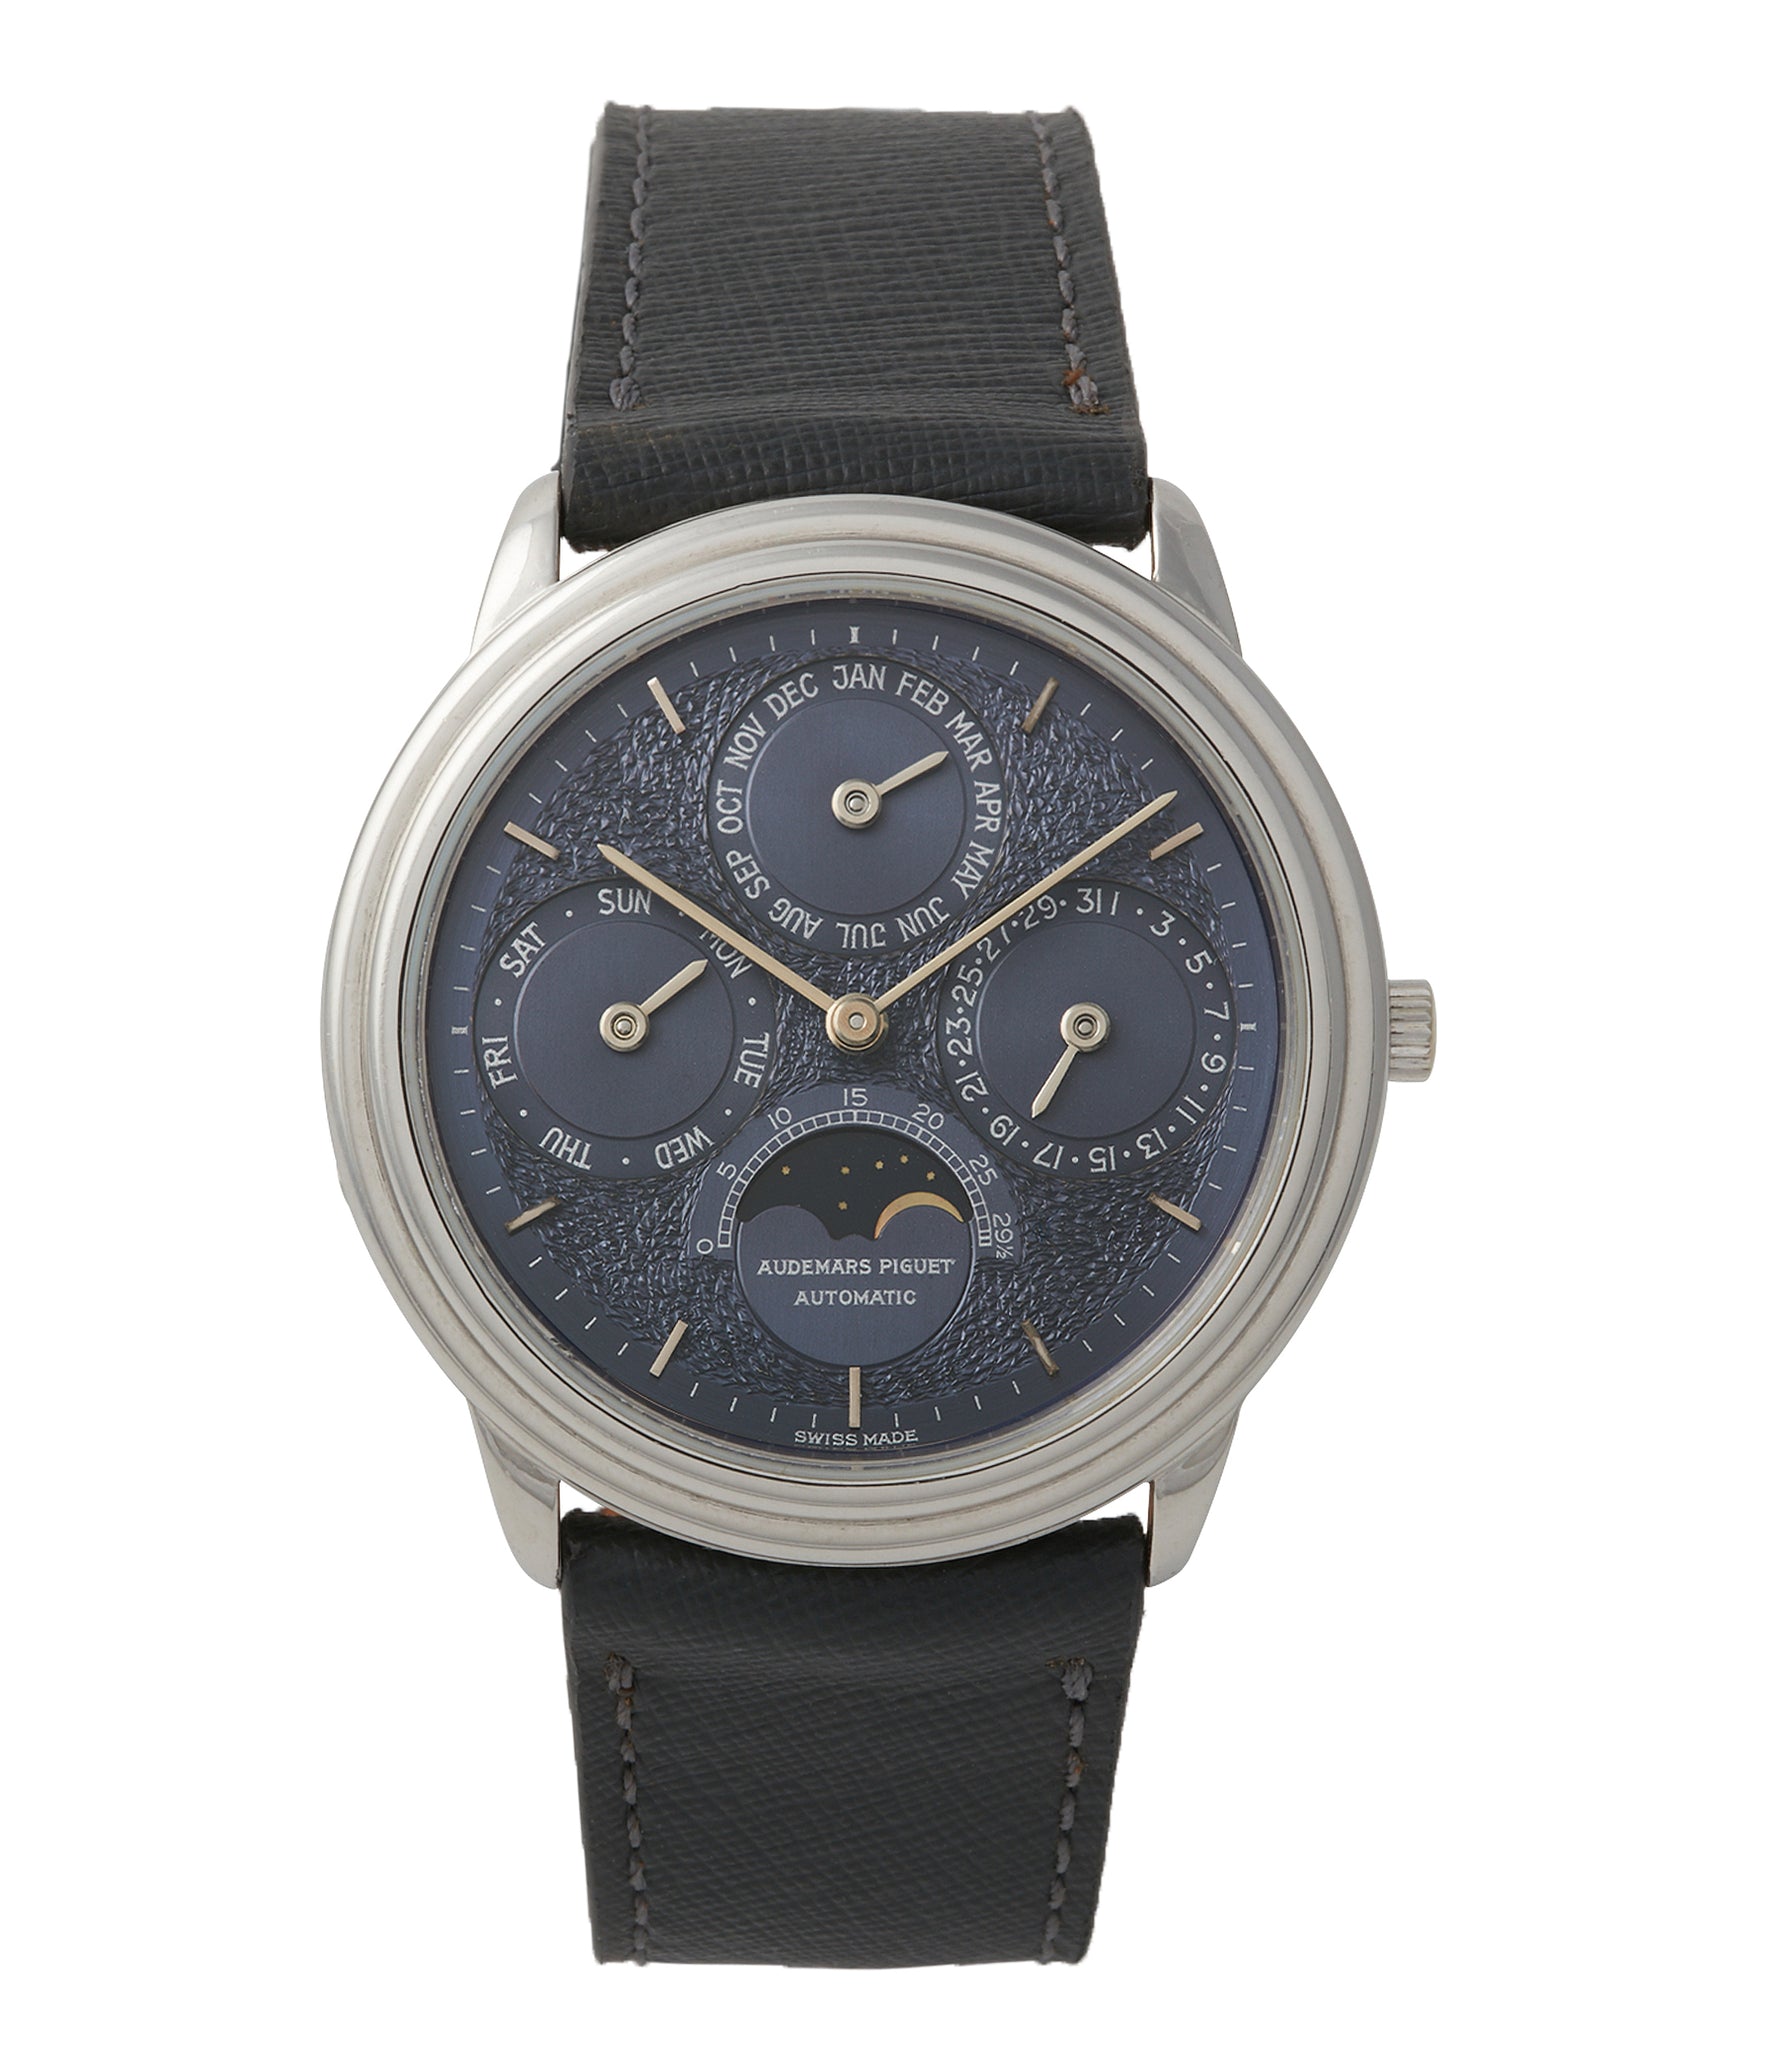 buy Audemars Piguet Quantieme Perpetual Calendar 2120/2 blue dial vintage dress watch for sale online at A Collected Man London UK specialist of rare watches